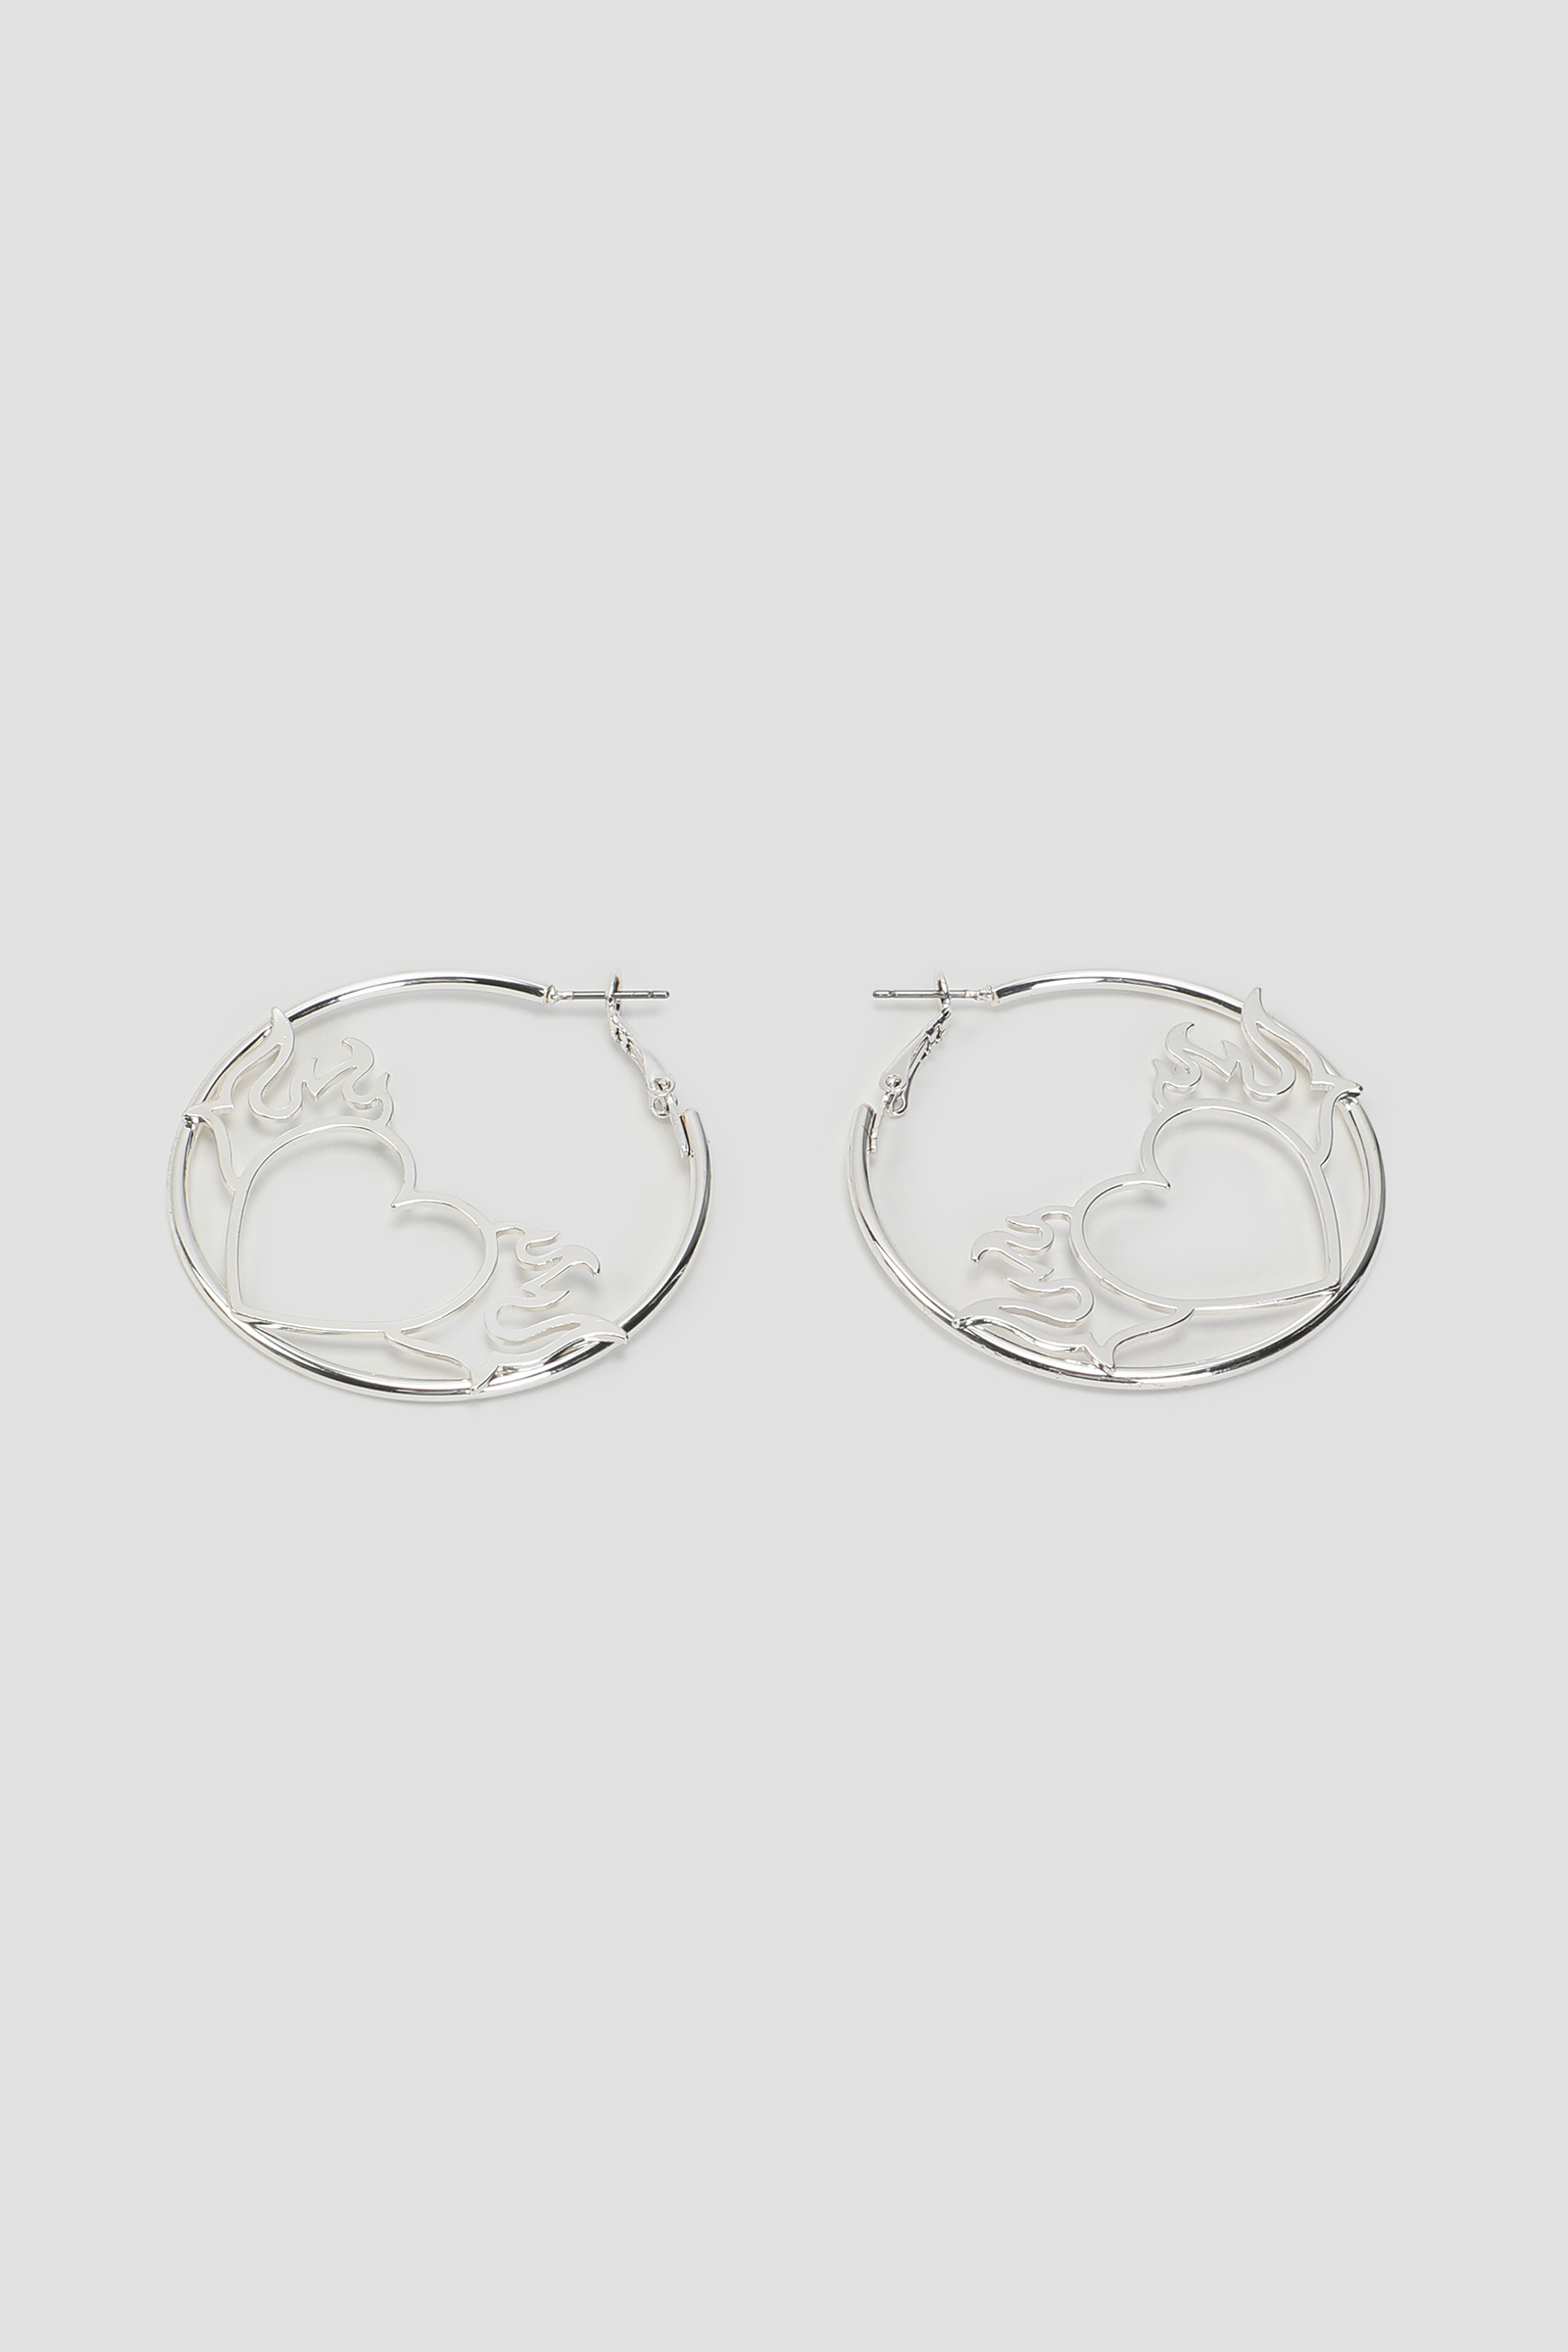 Ardene Flaming Heart Hoop Earrings in Silver | Stainless Steel